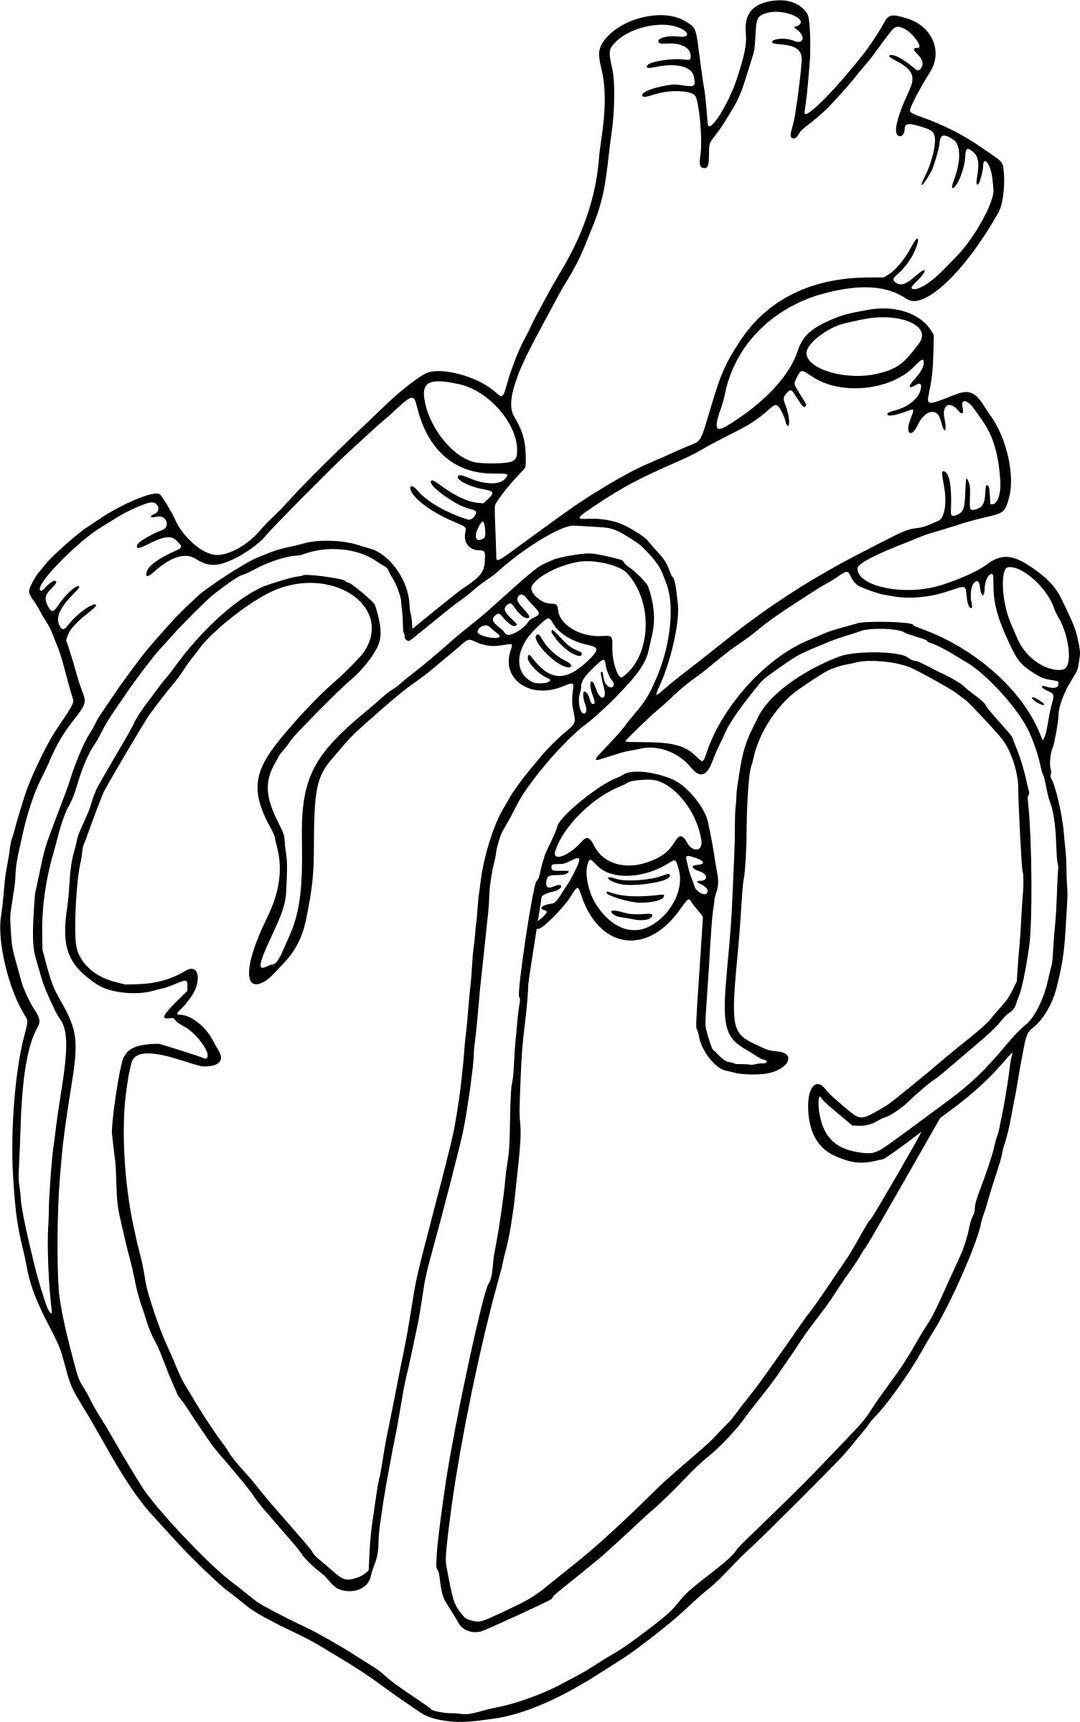 Heart diagram png transparent